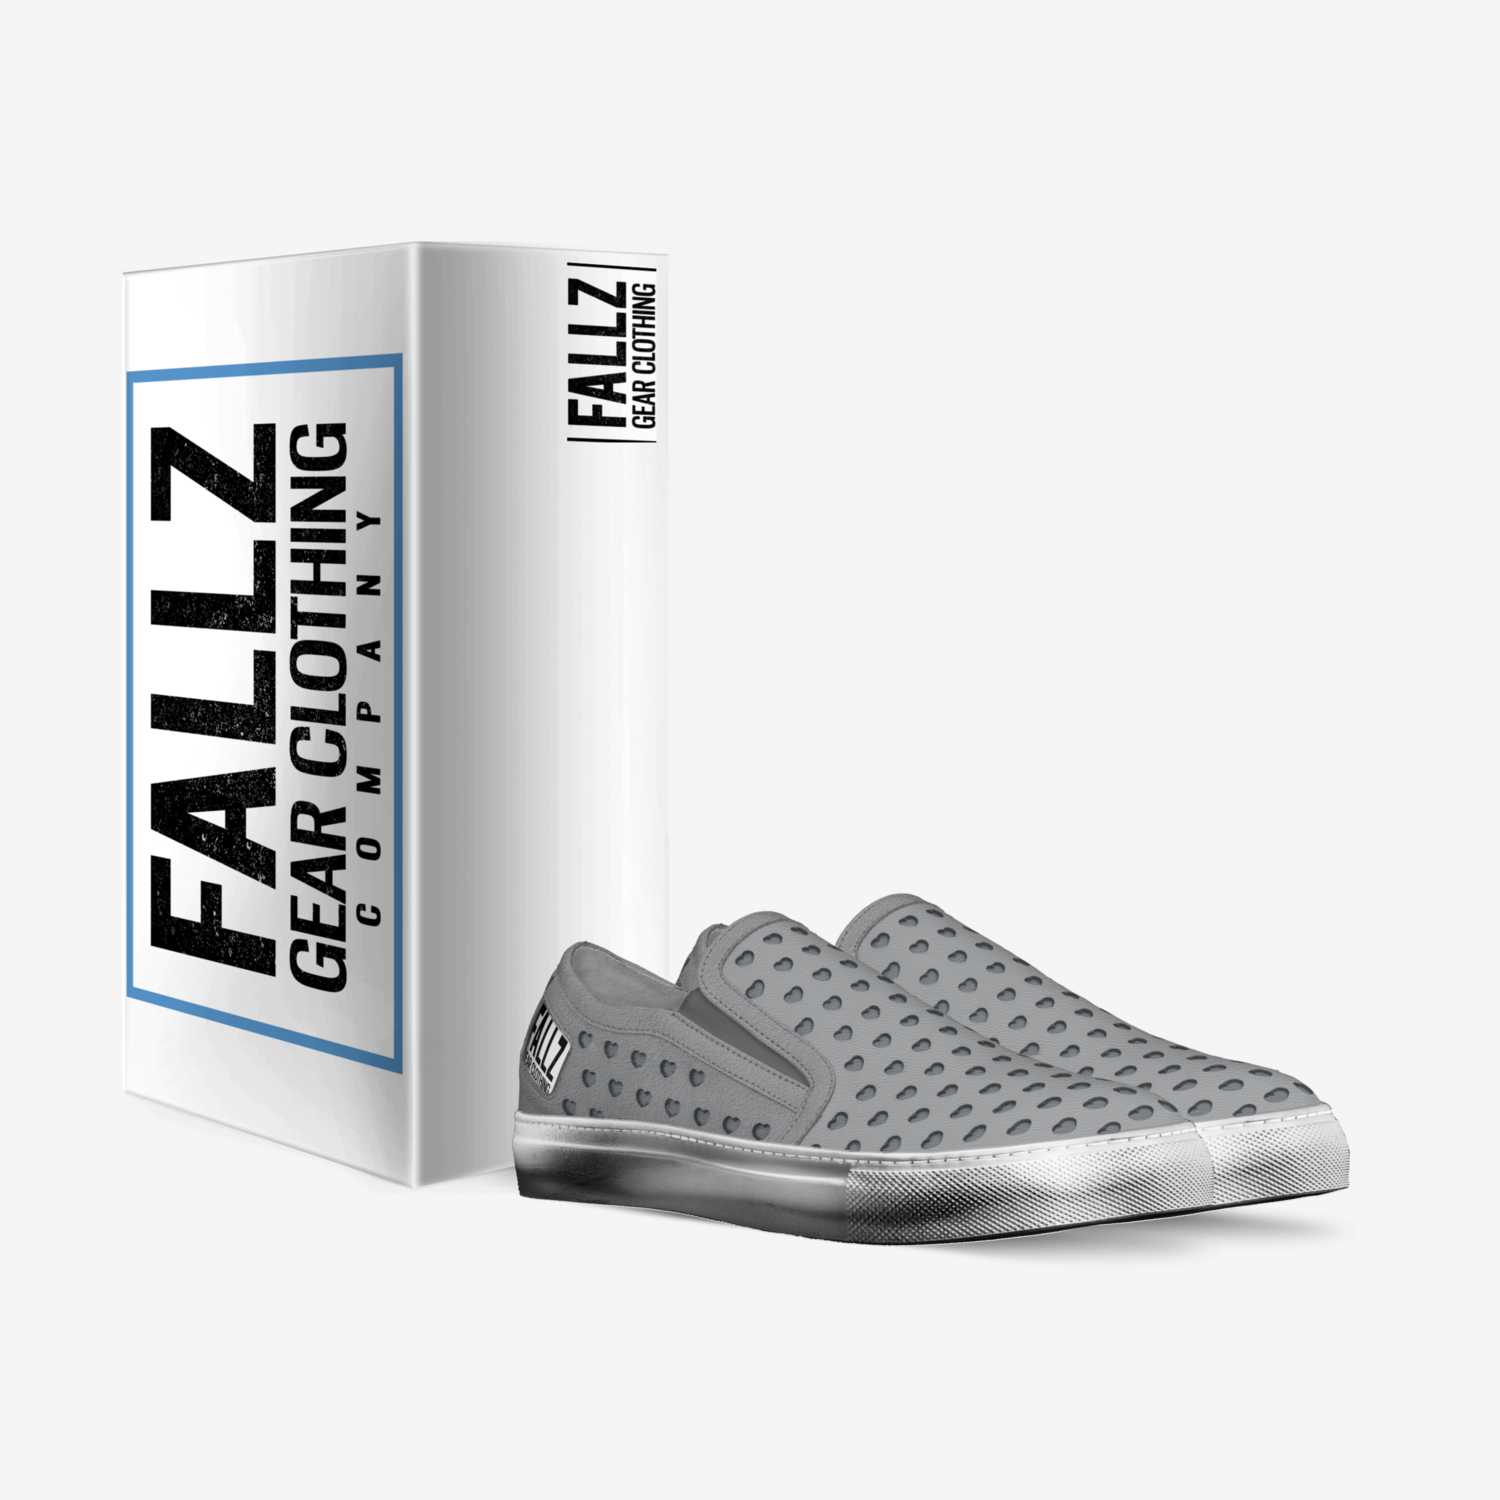 Fallz Gear: Girly custom made in Italy shoes by Fallz Gear | Box view